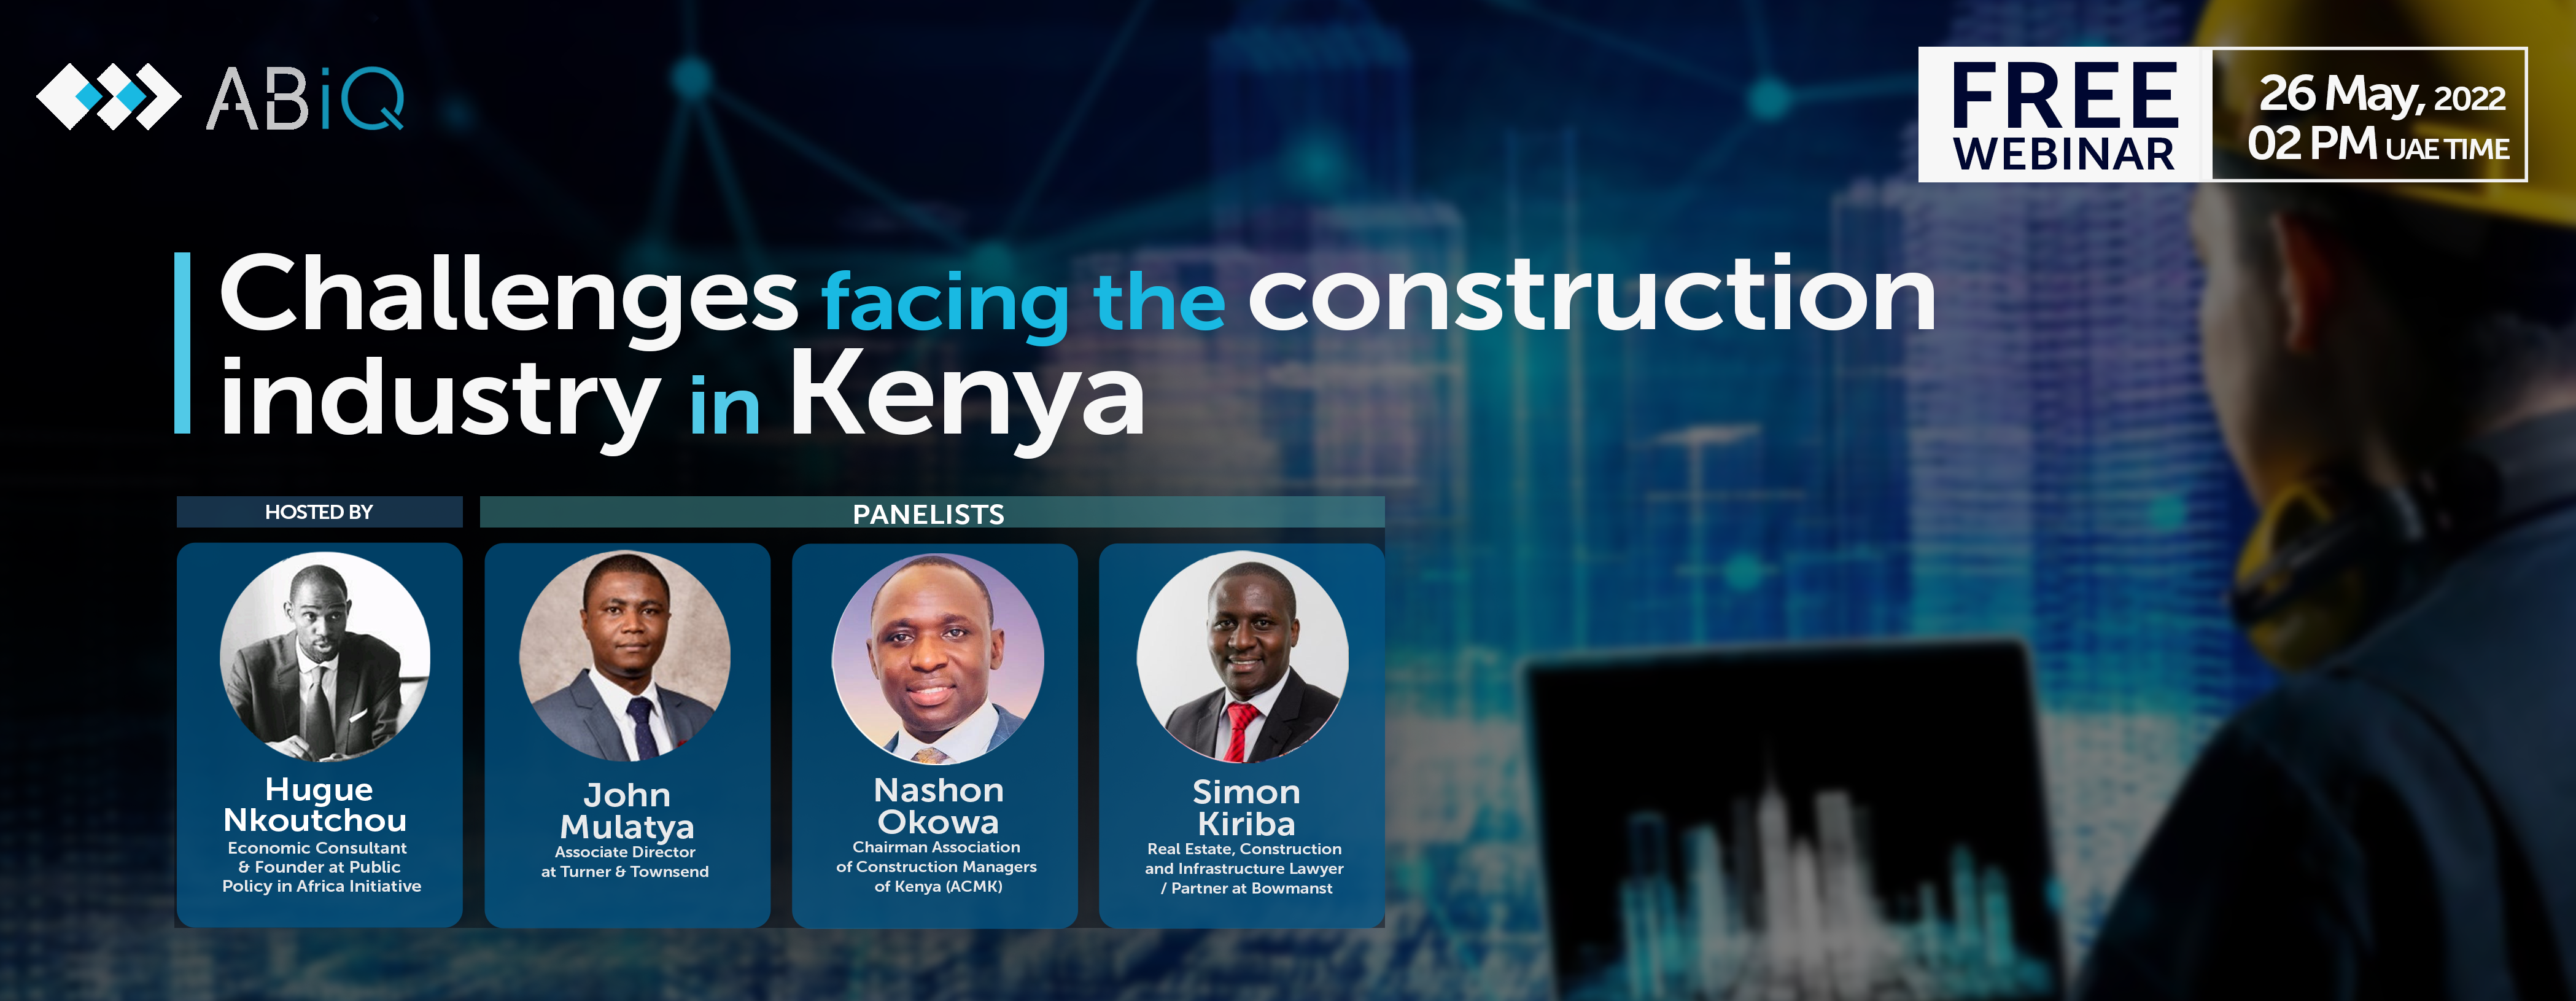 Webinar on Kenya Construction